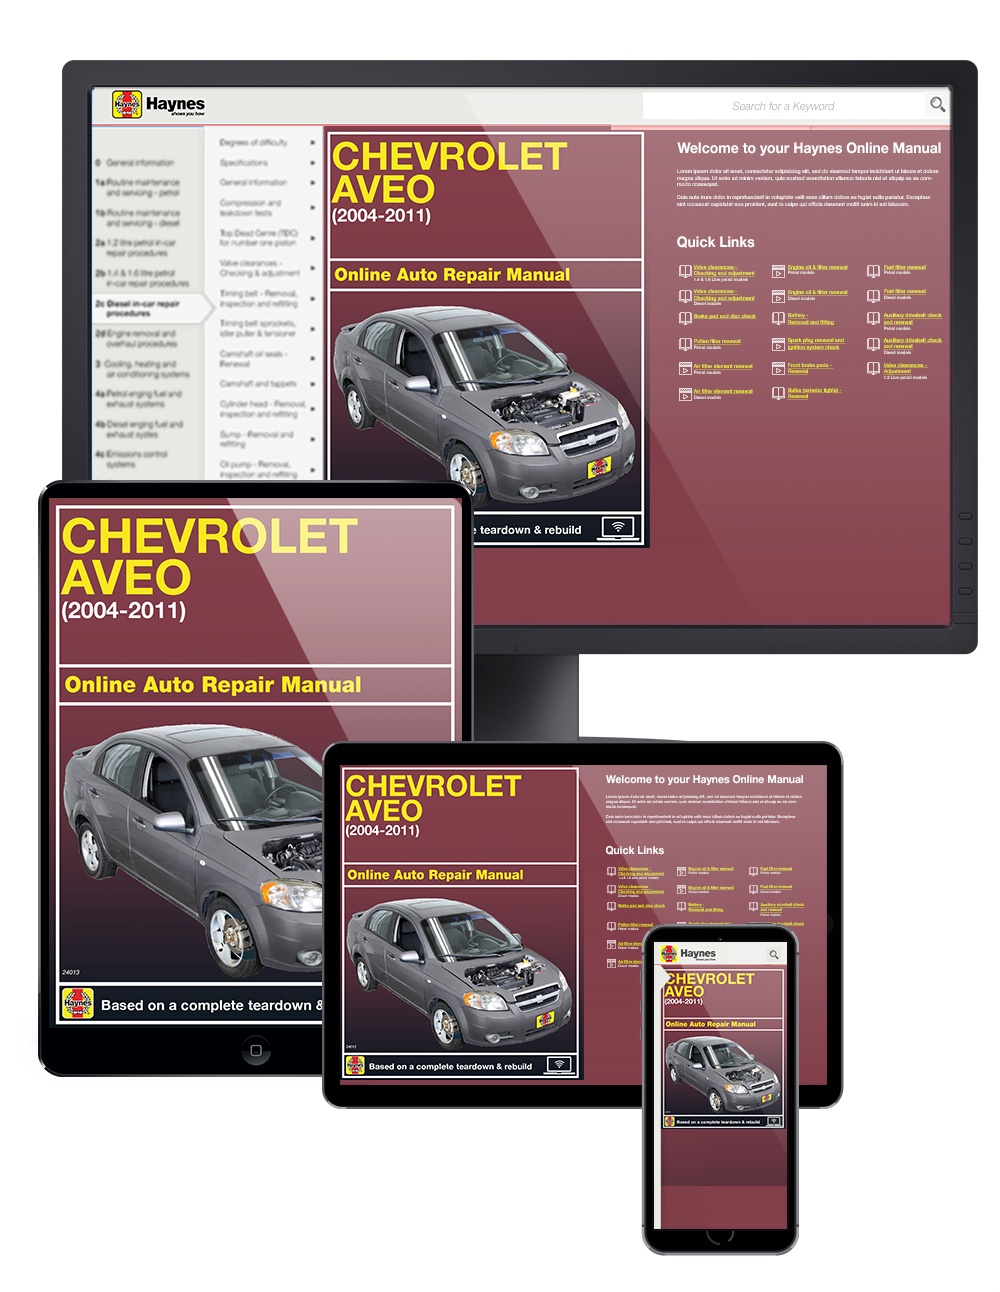 Chevrolet Aveo 2002 03 04 05 06 07 08 09 10 Service Repair Manual on CD